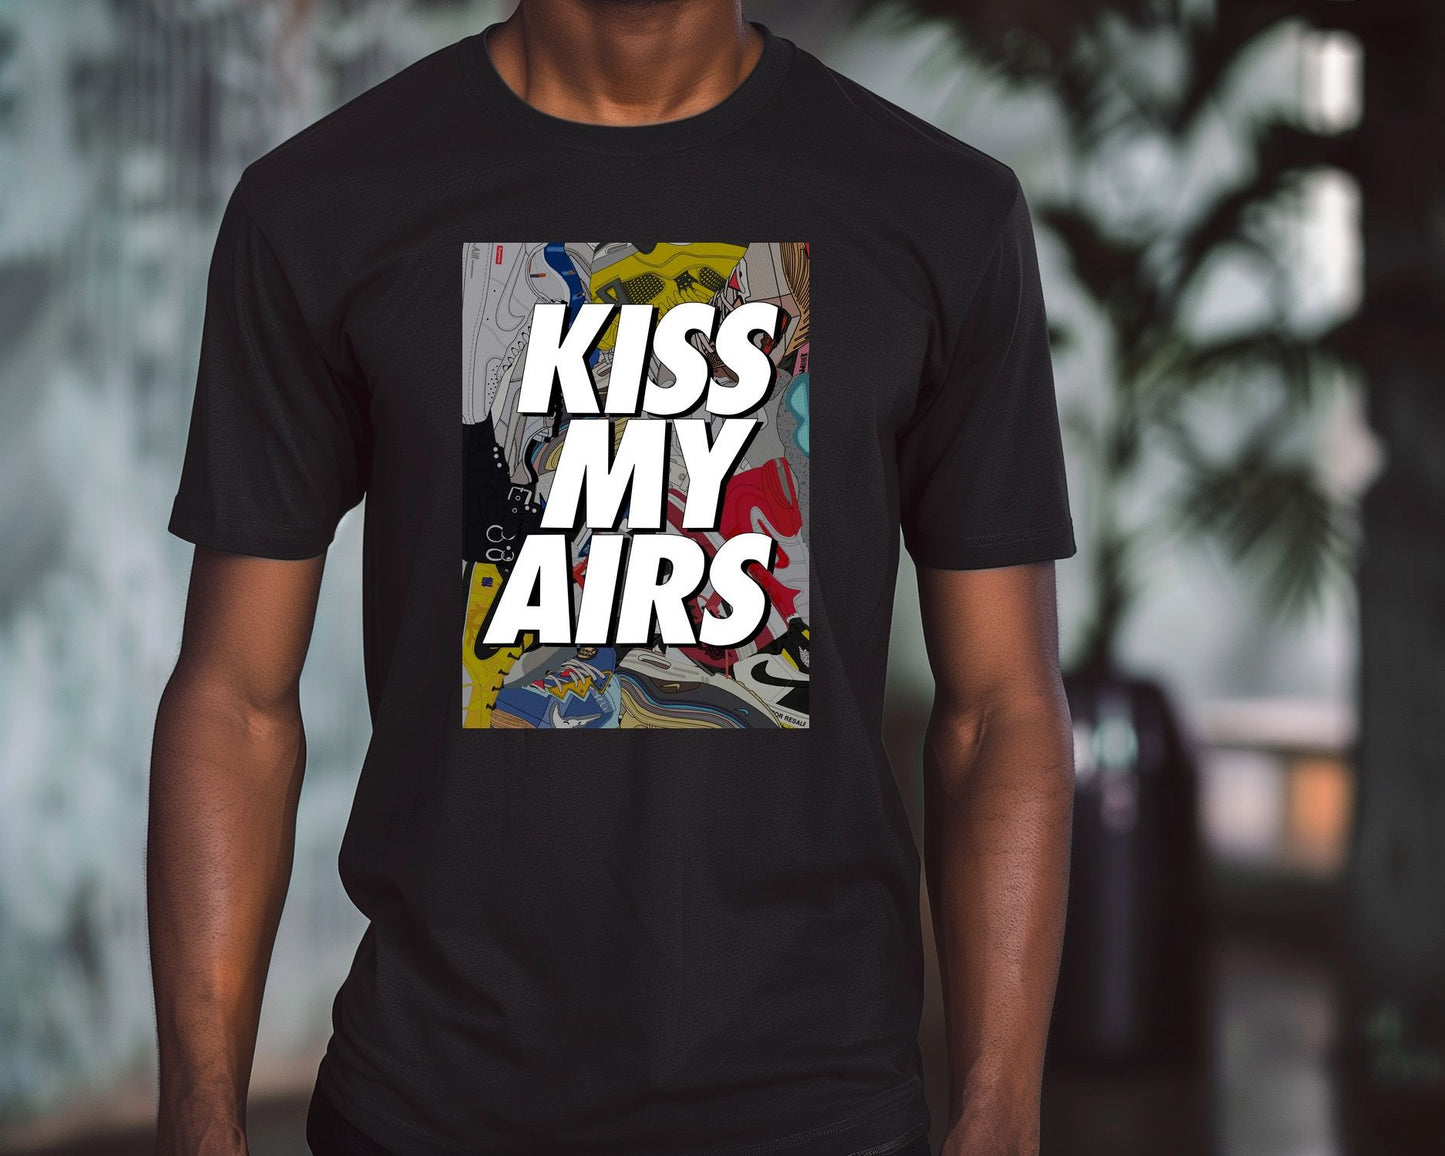 Kiss my airs - @Ciat.kicks